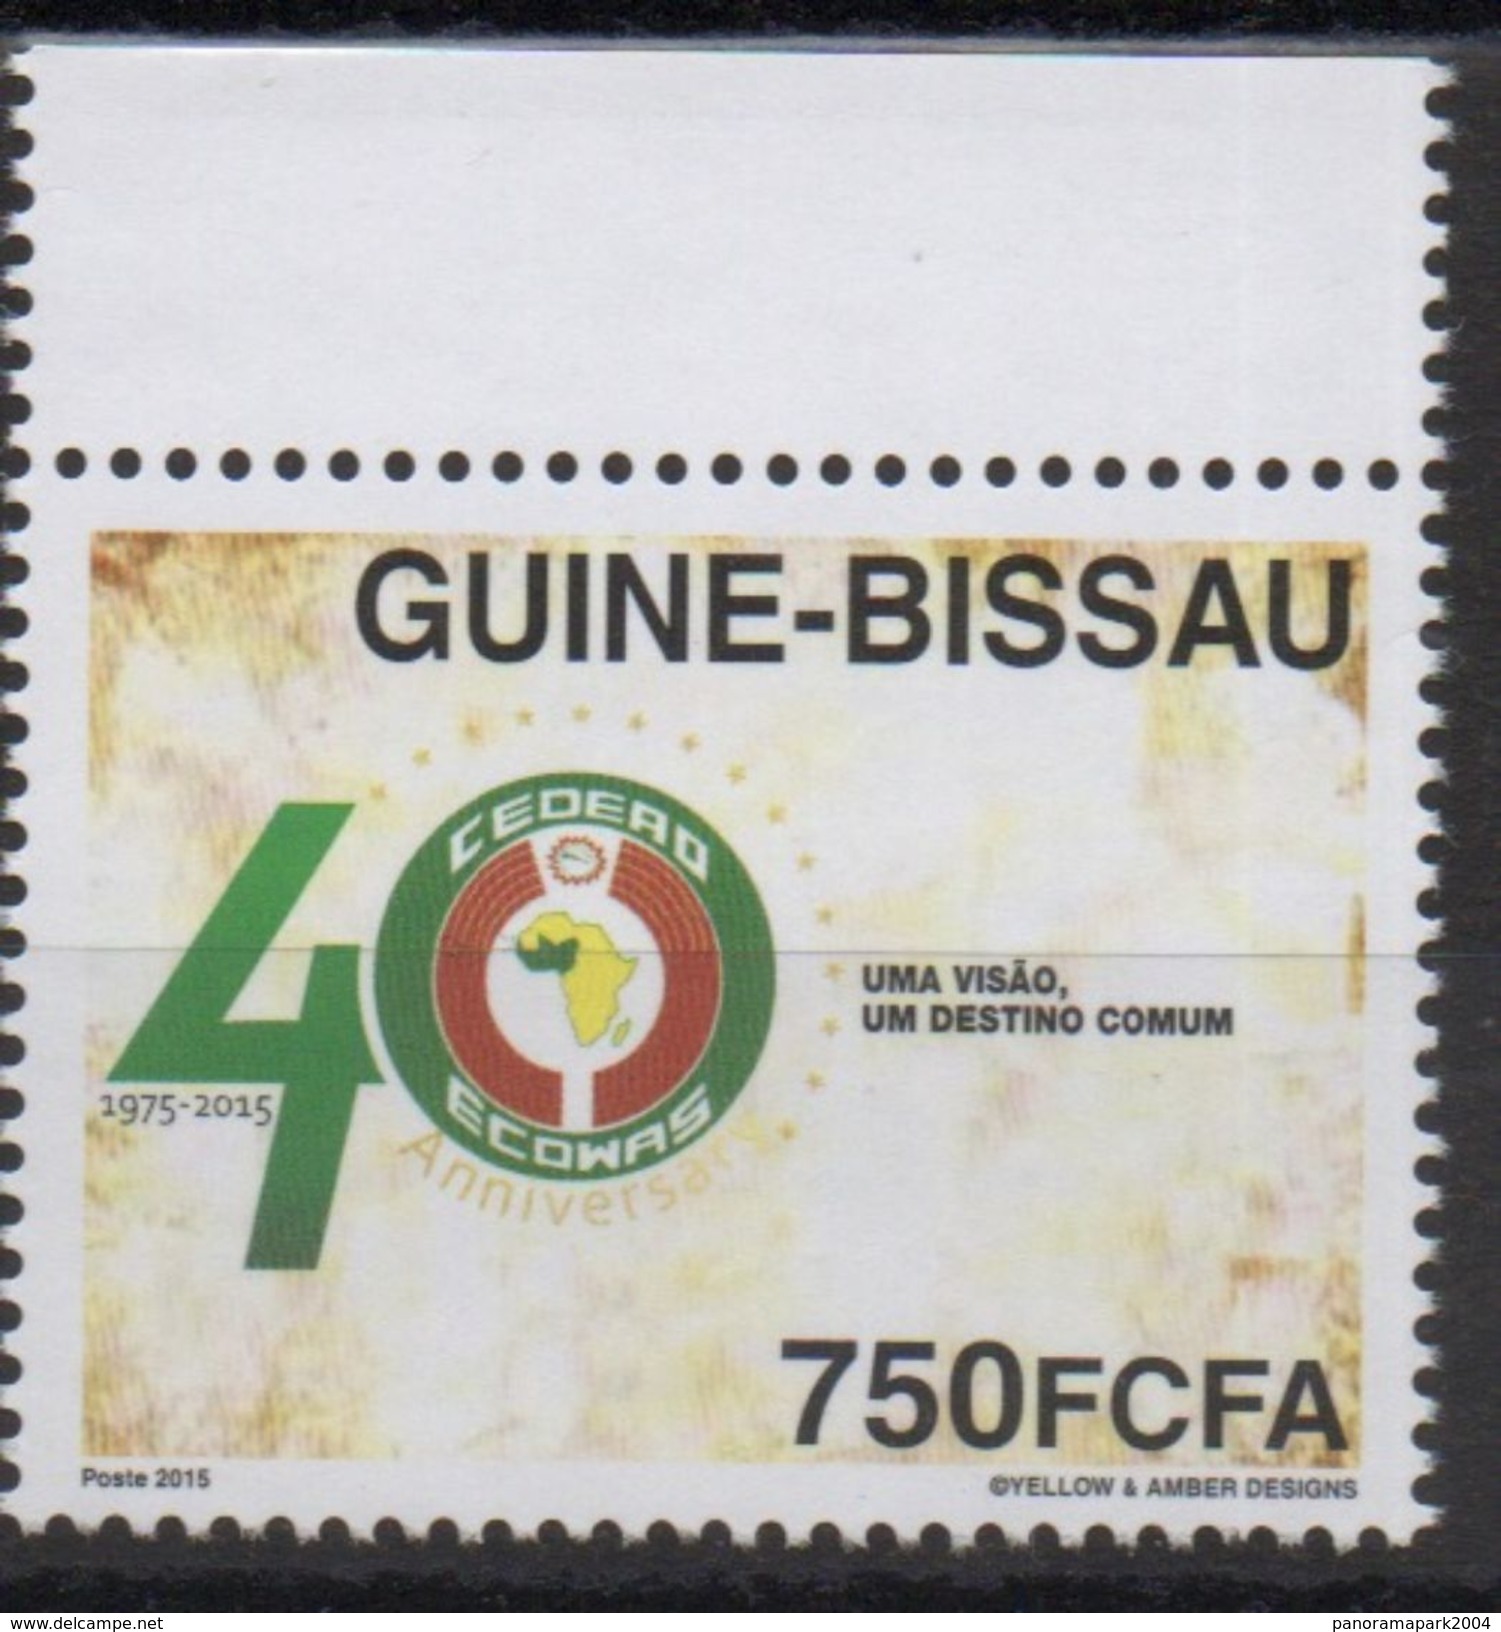 ULTRA RARE UNISSUED 750F VAL !!! Guiné-Bissau Guinea Guinée 2015 Joint Issue CEDEAO ECOWAS - Emissions Communes